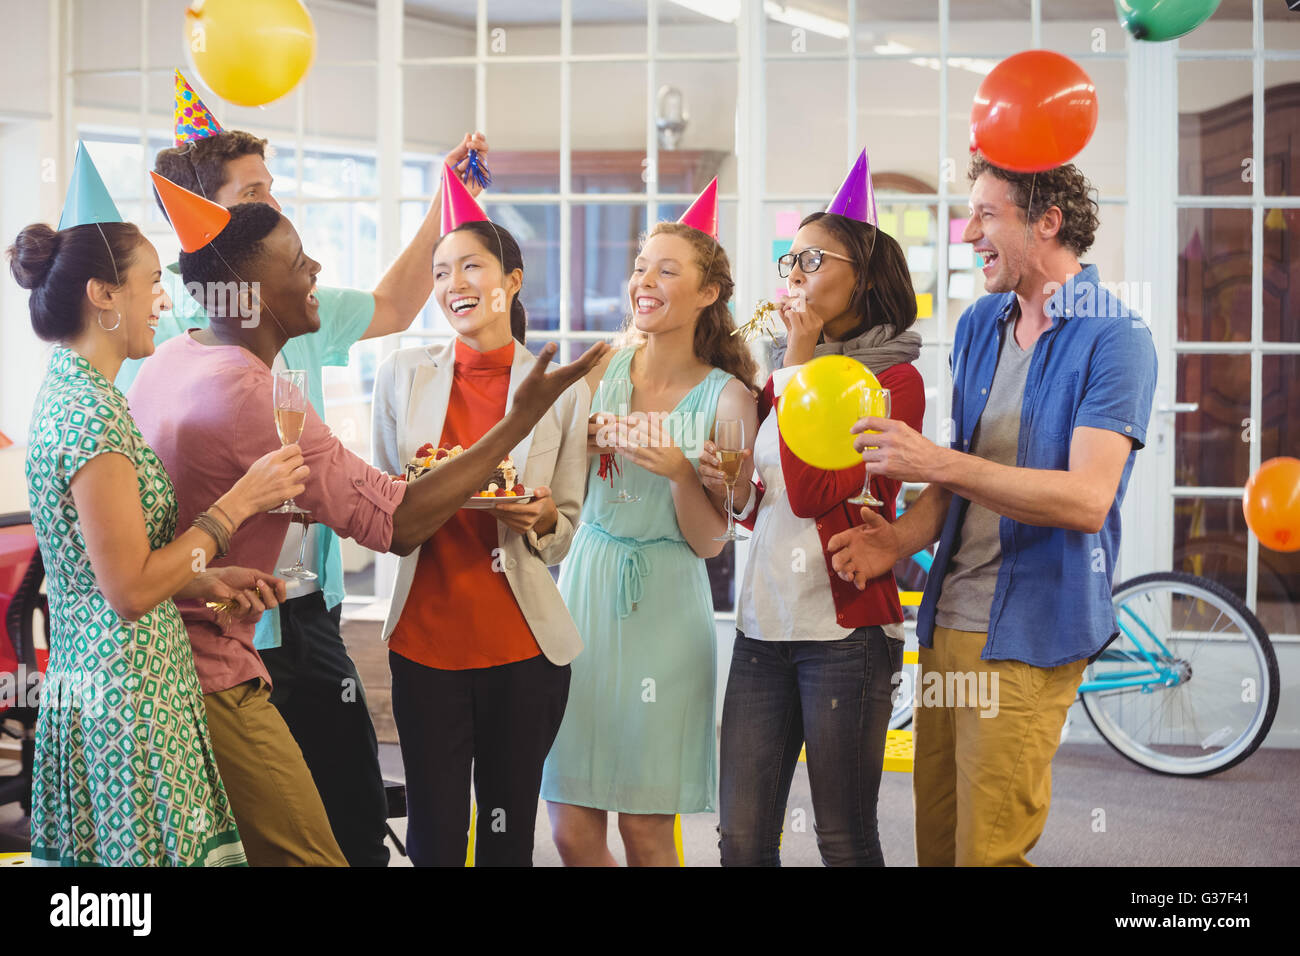 Business people celebrating a birthday Stock Photo